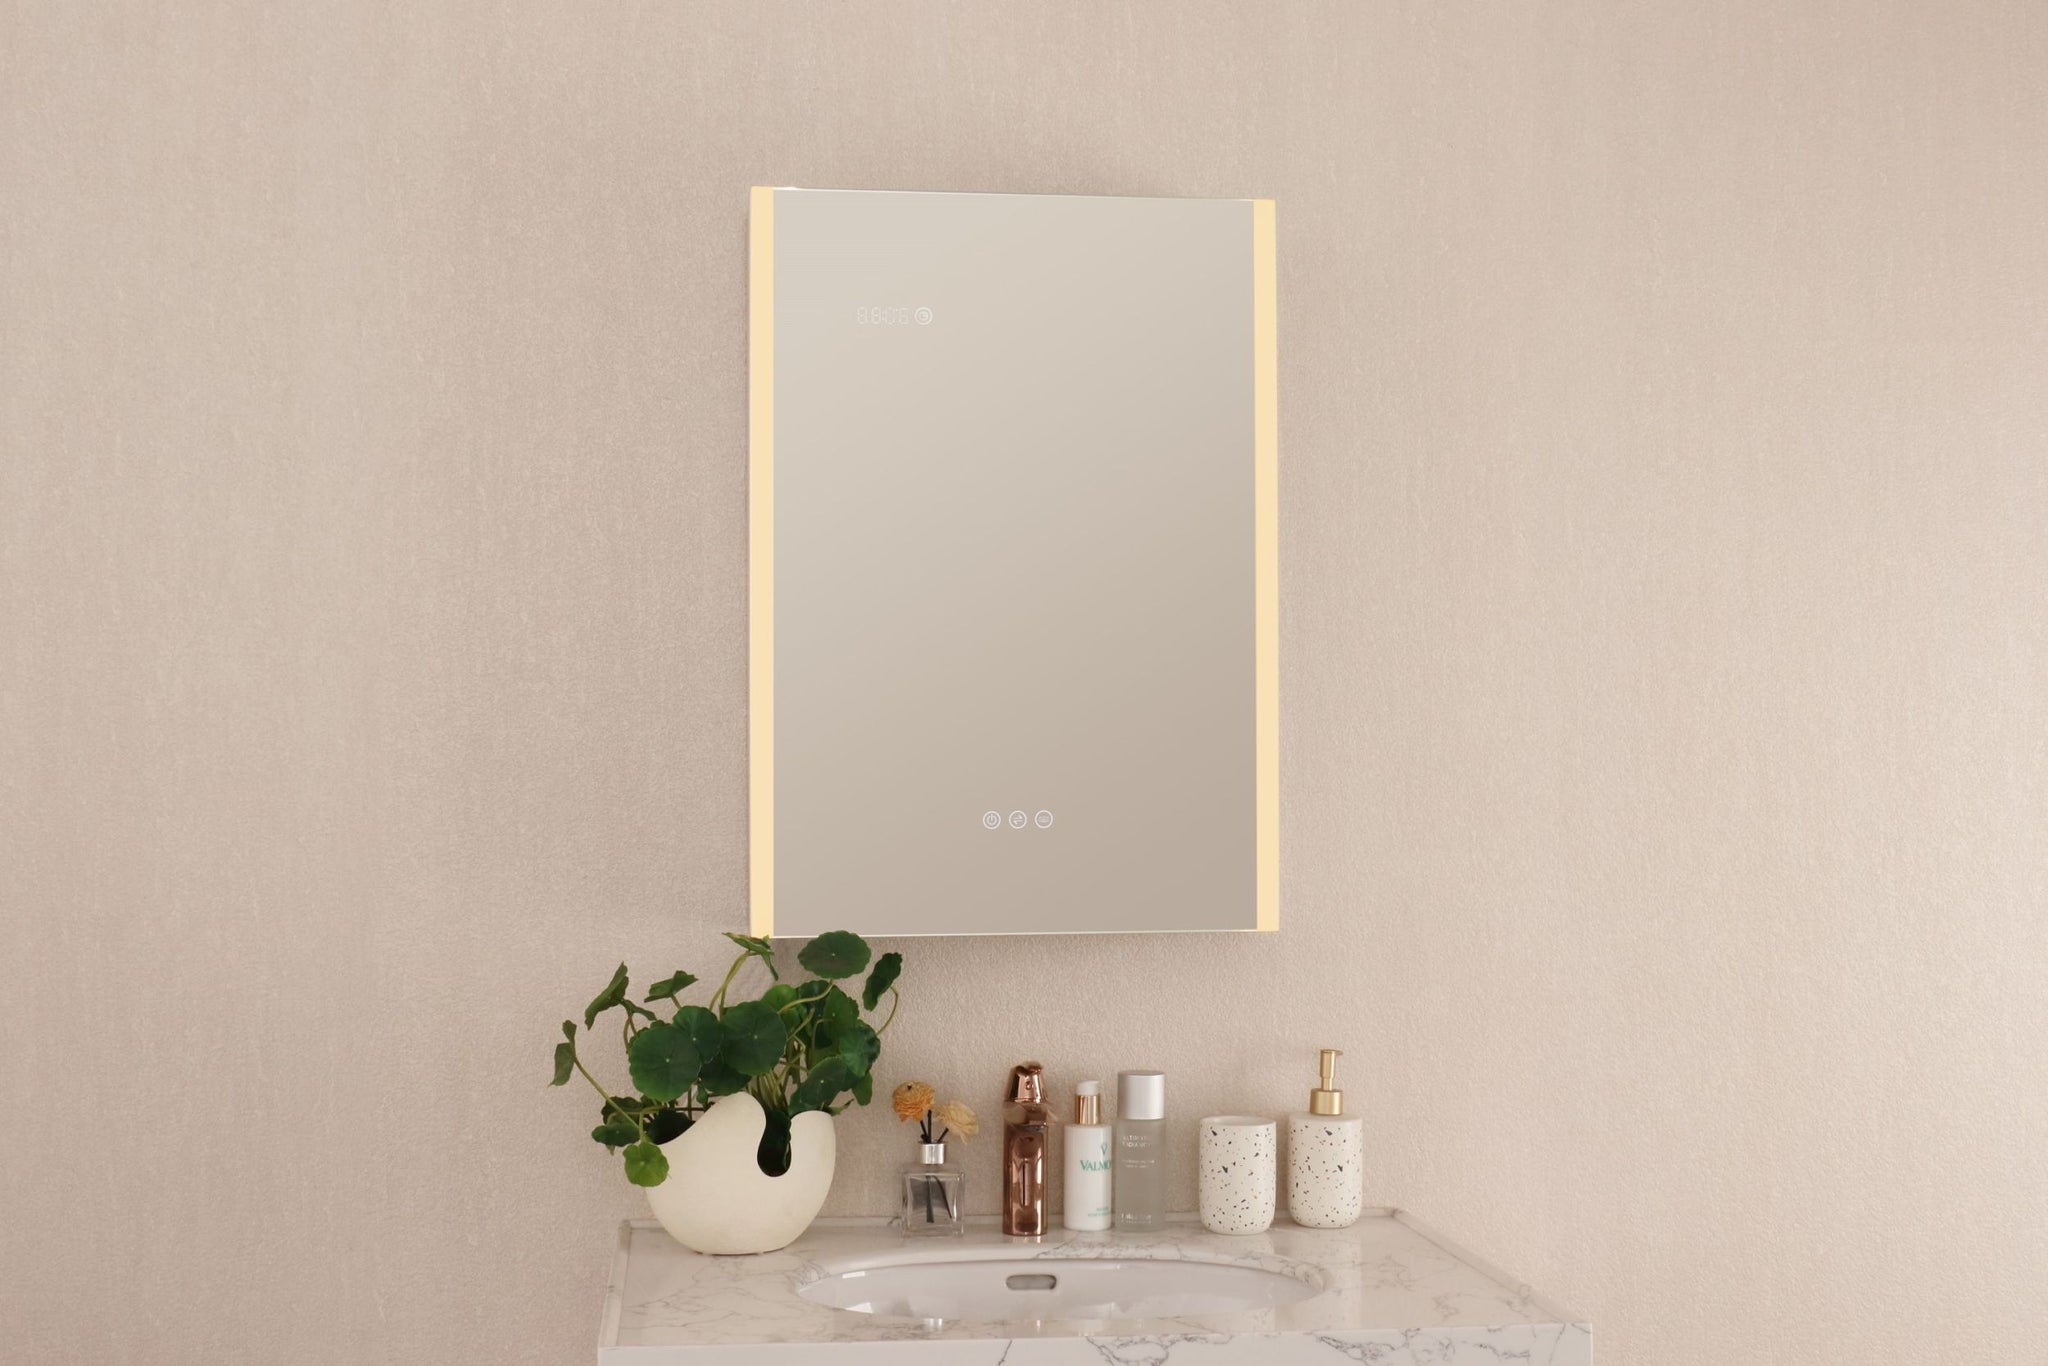 36 X 30 inch mirror Cabinet, Wall Mounted LED Bathroom